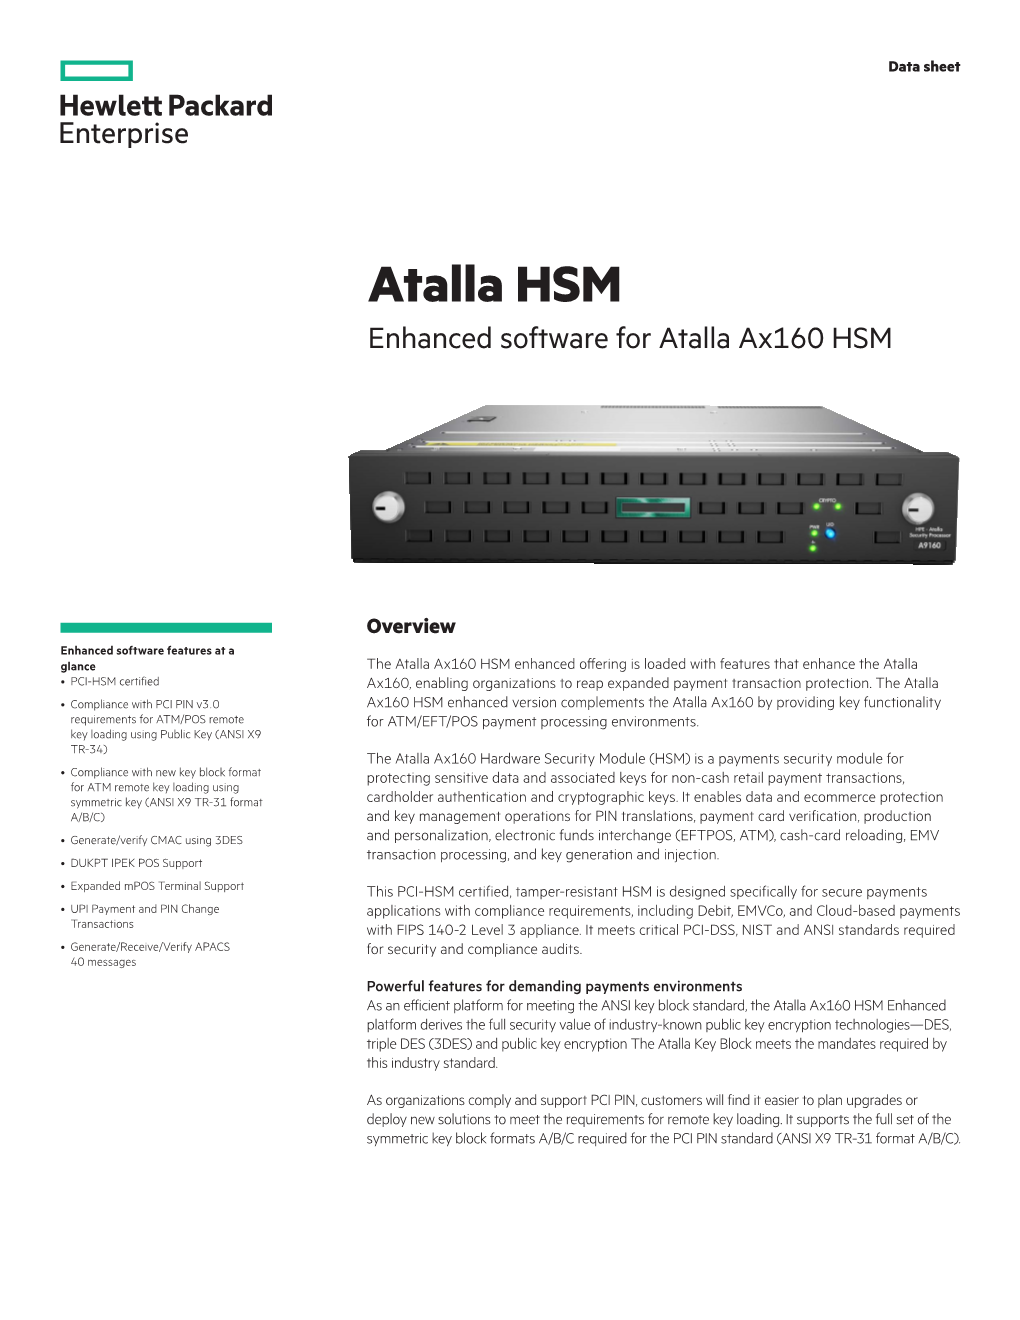 Enhanced Software for Atalla Ax160 HSM